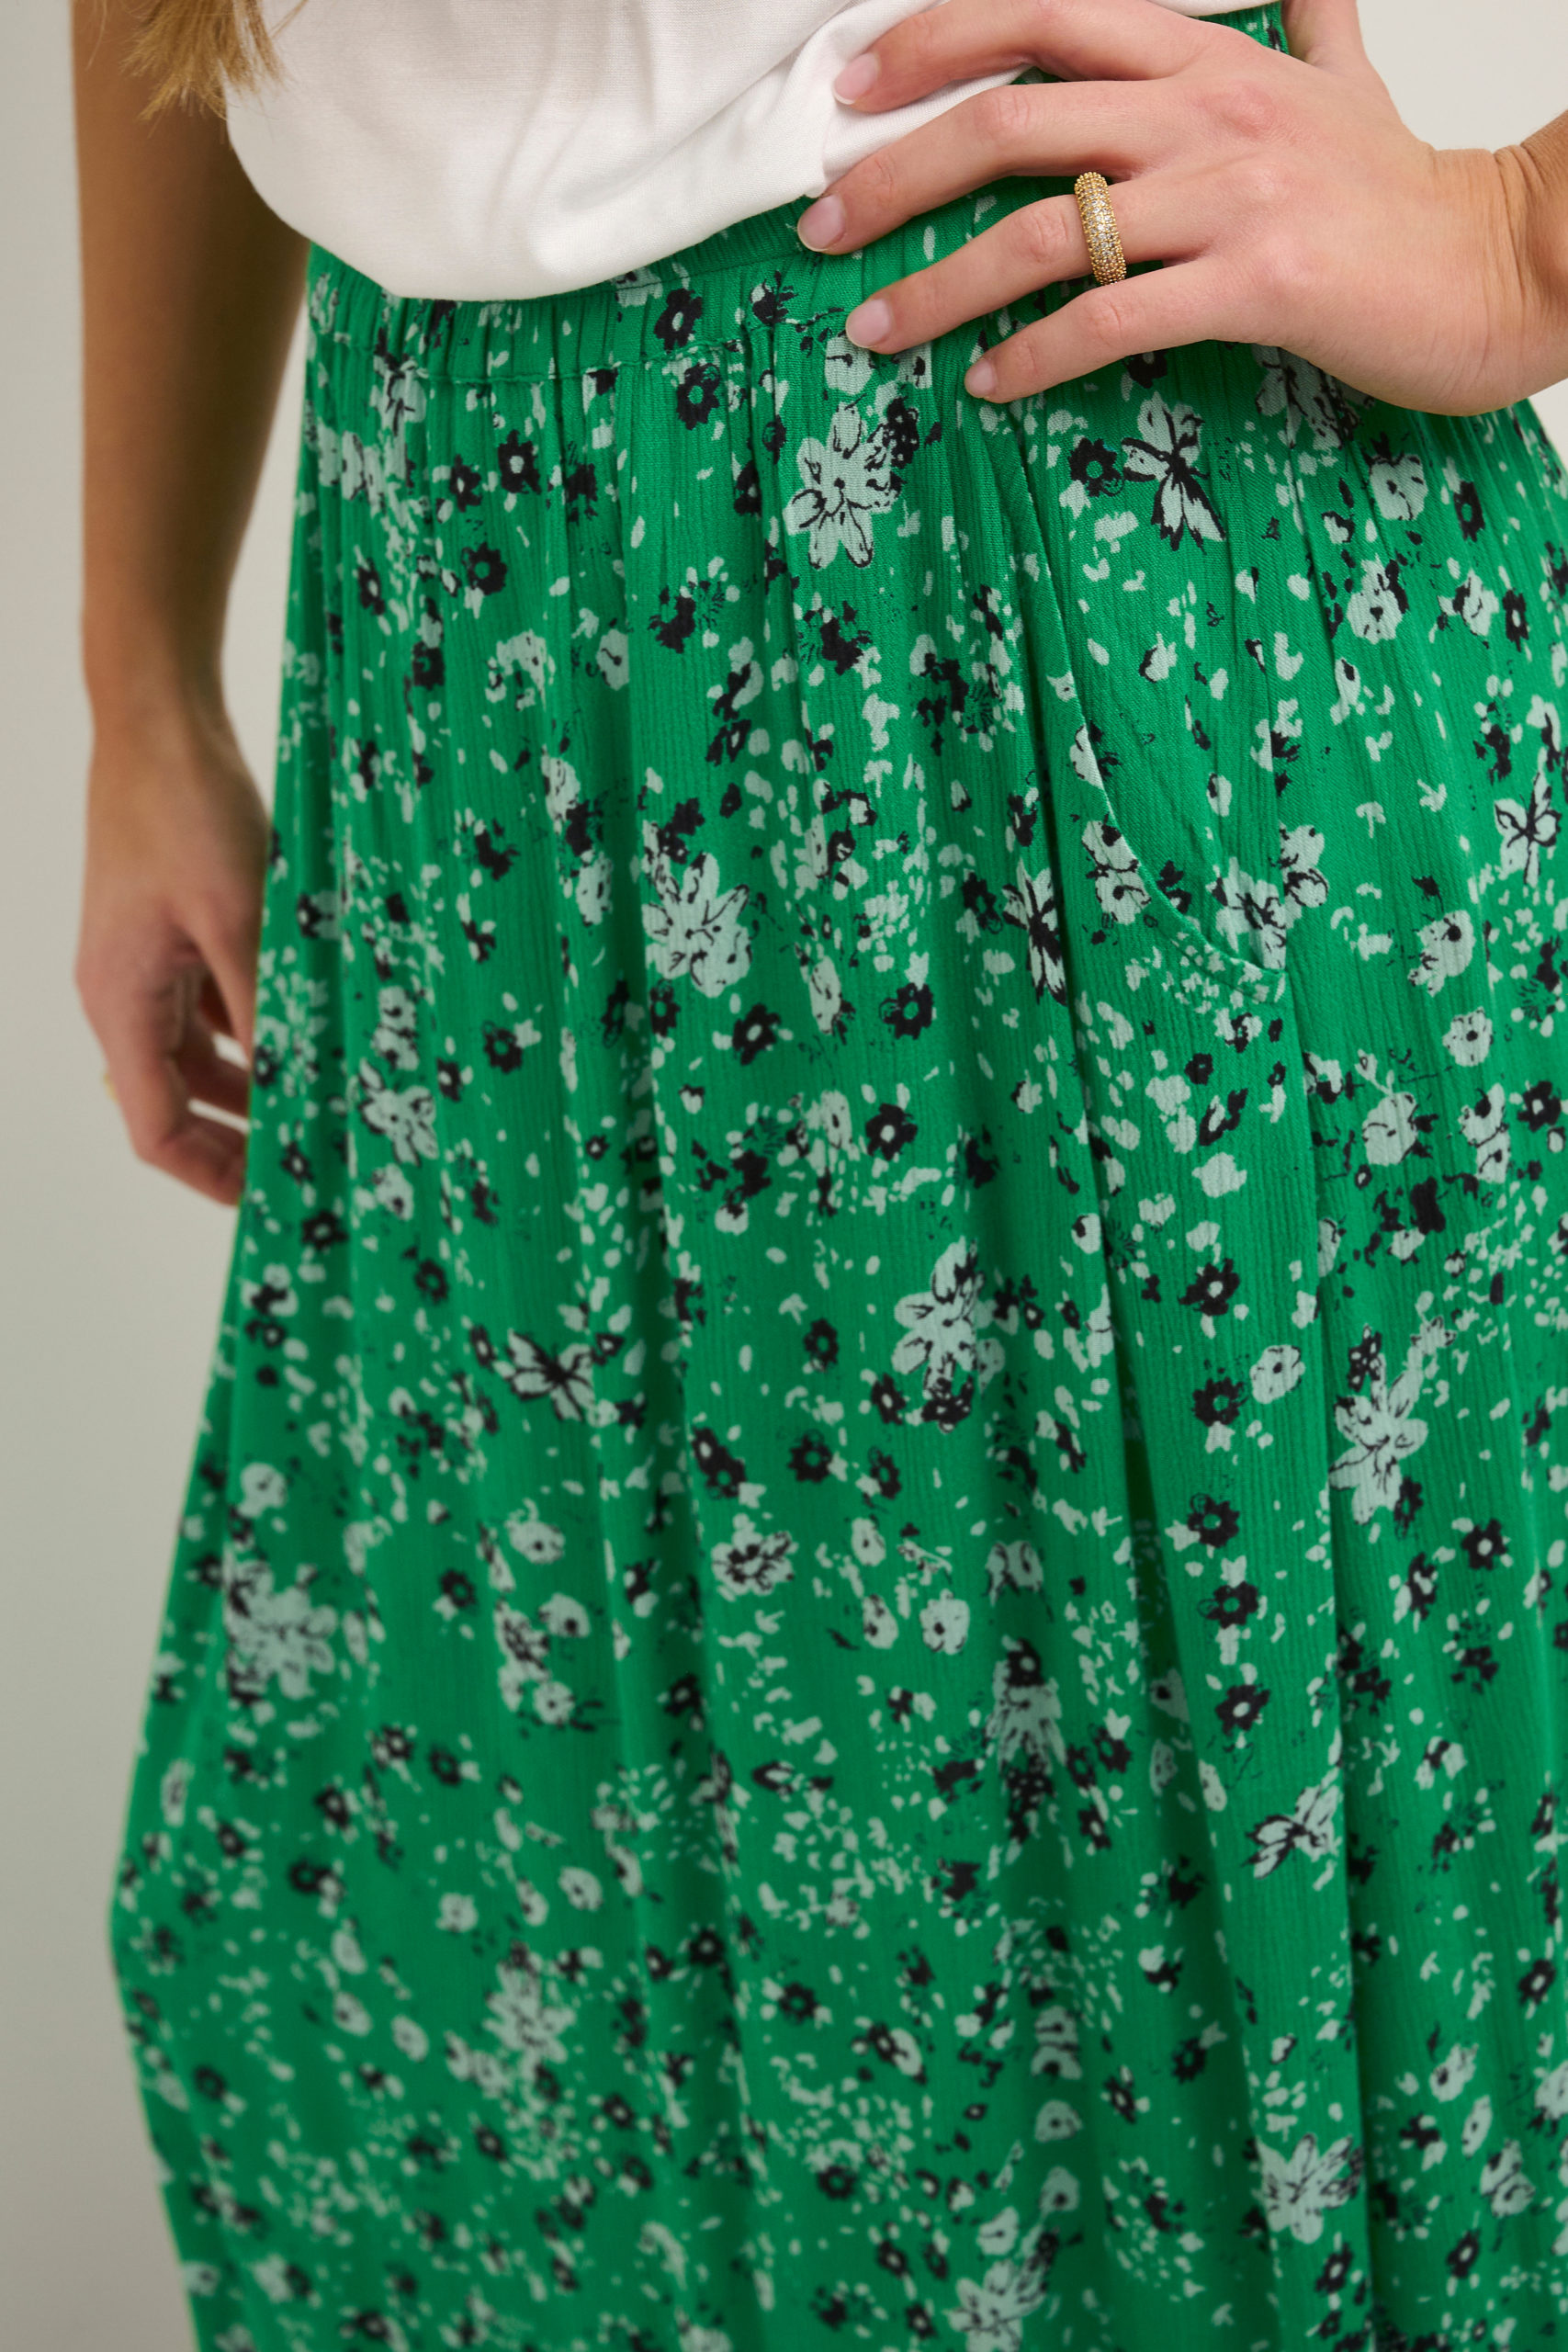 KAvilia Amber Skirt green closeup